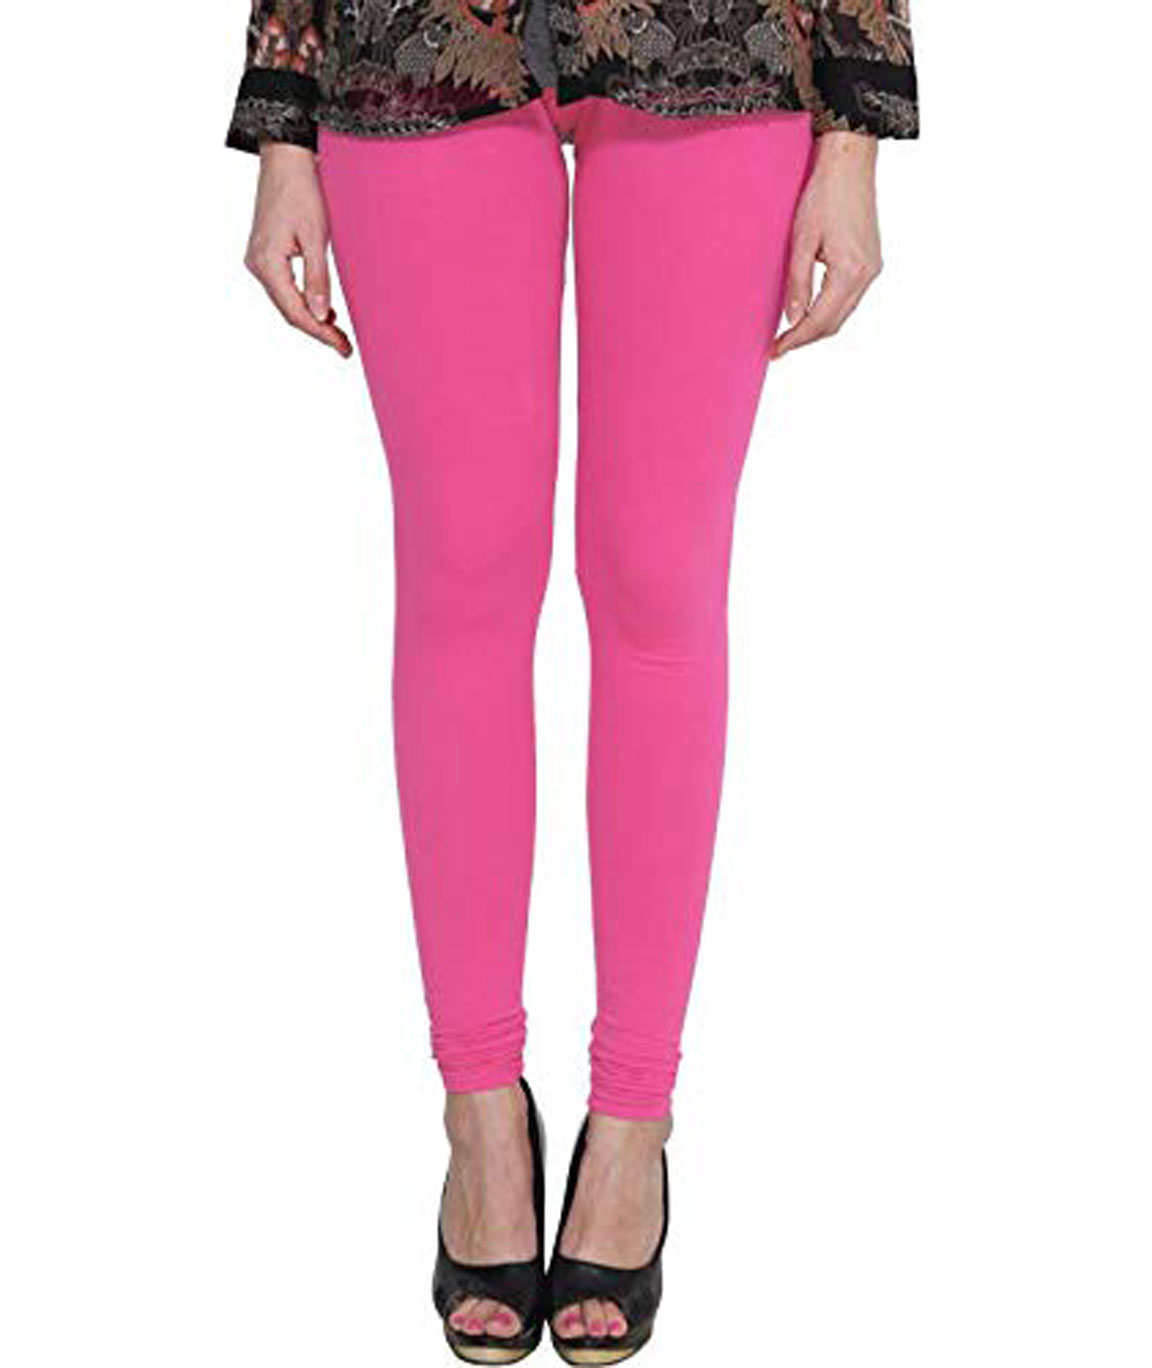 https://www.manthanonline.in/uploadImages/productimage/swag-wear-churidar-legging-baby-pink--b.jpg